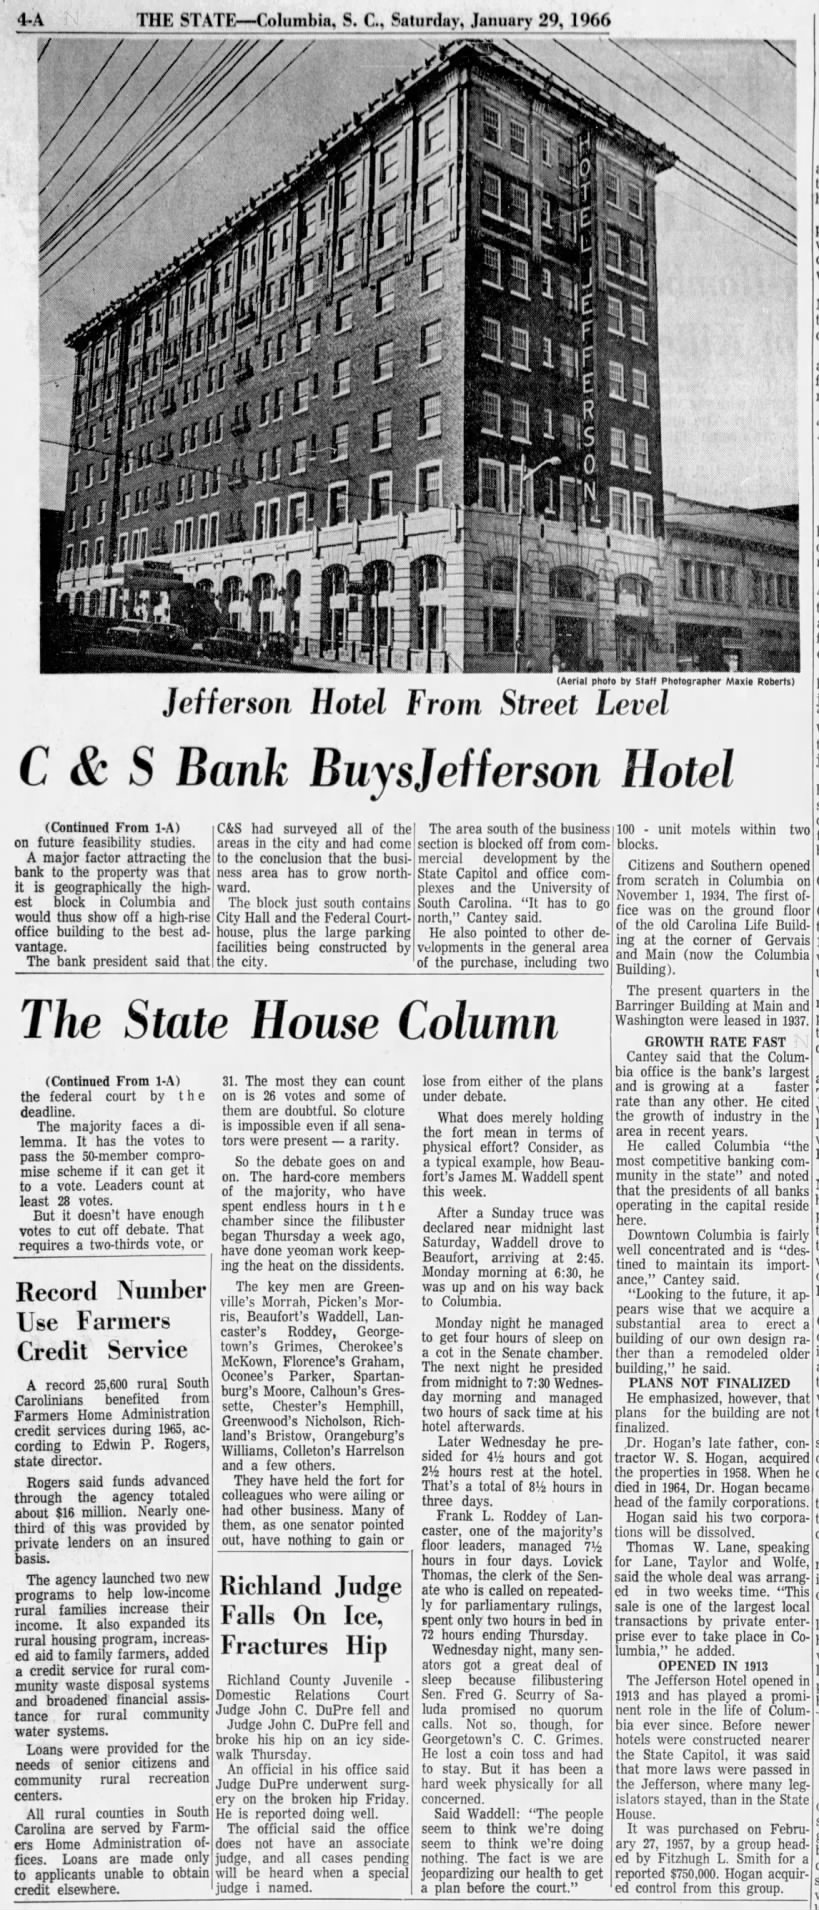 C & S Bank Buys Jefferson Hotel